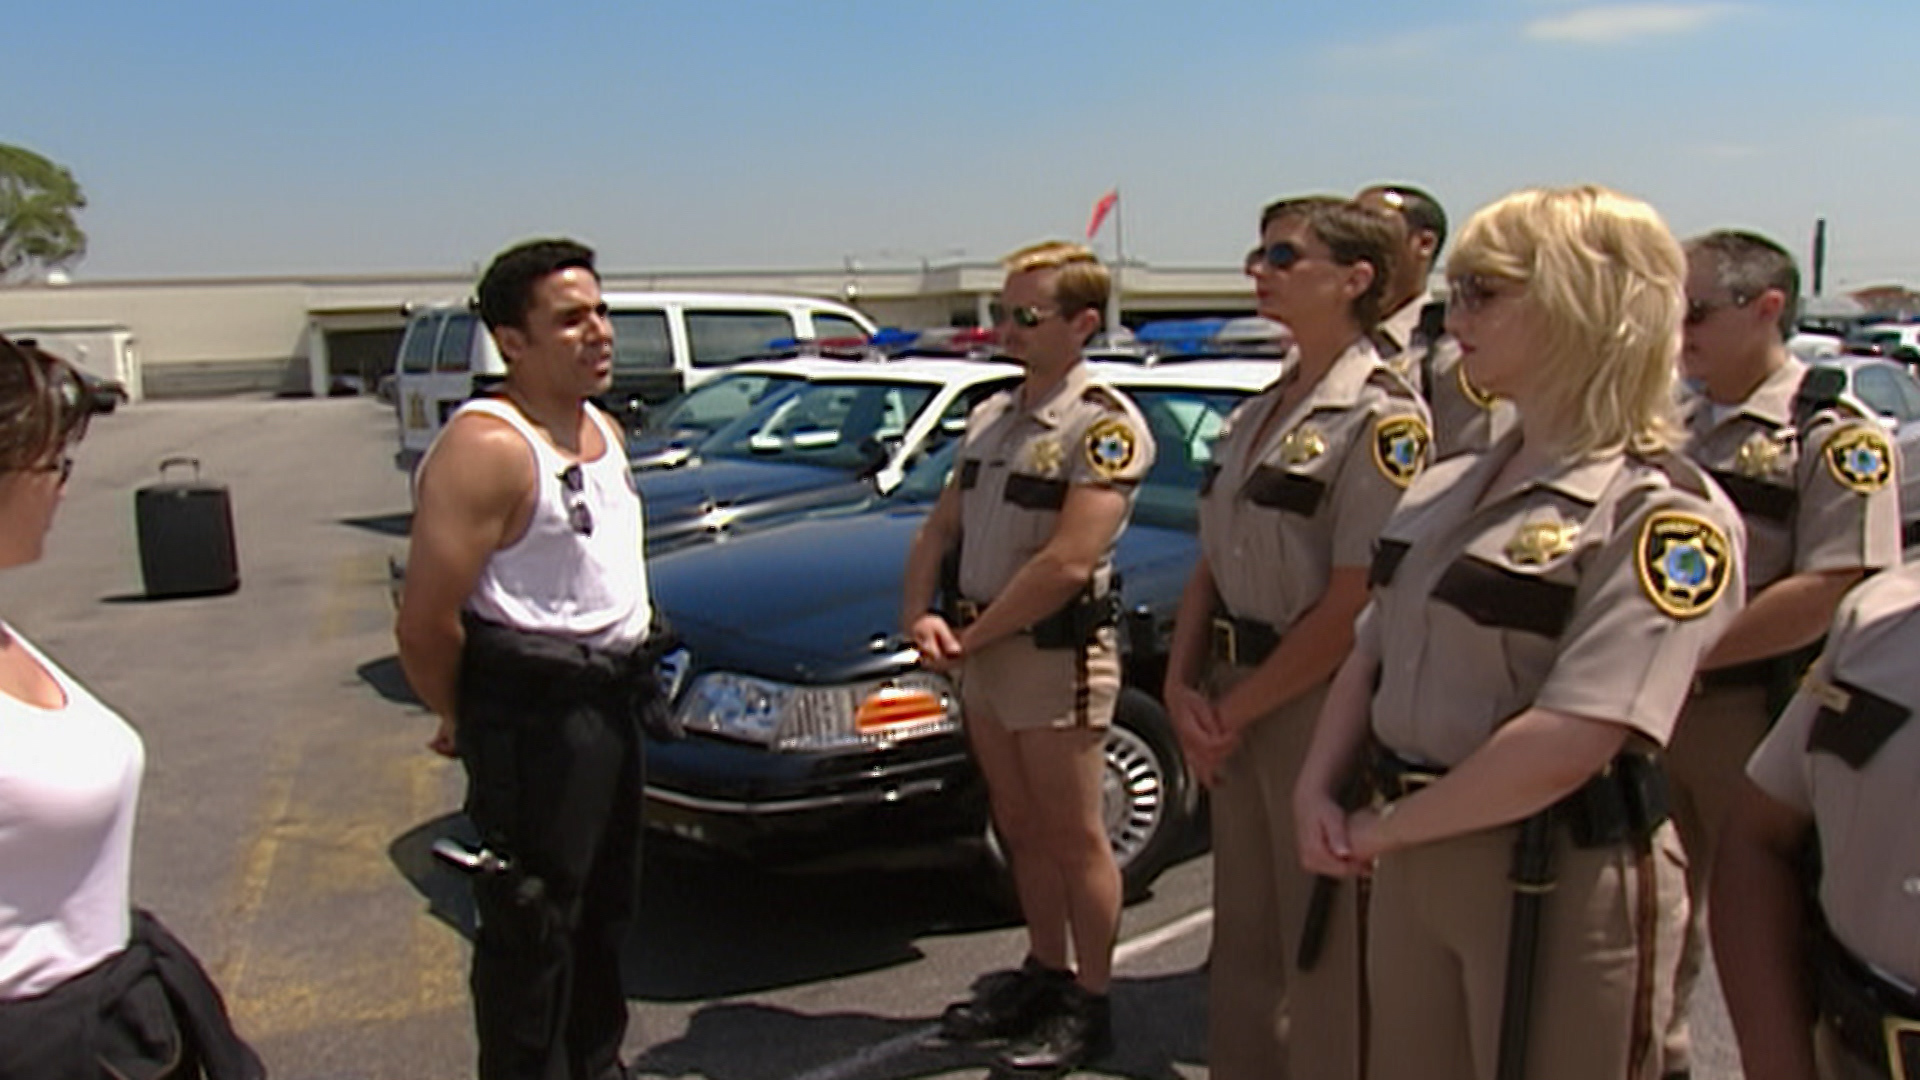 Reno 911! Season 1 - watch full episodes streaming online